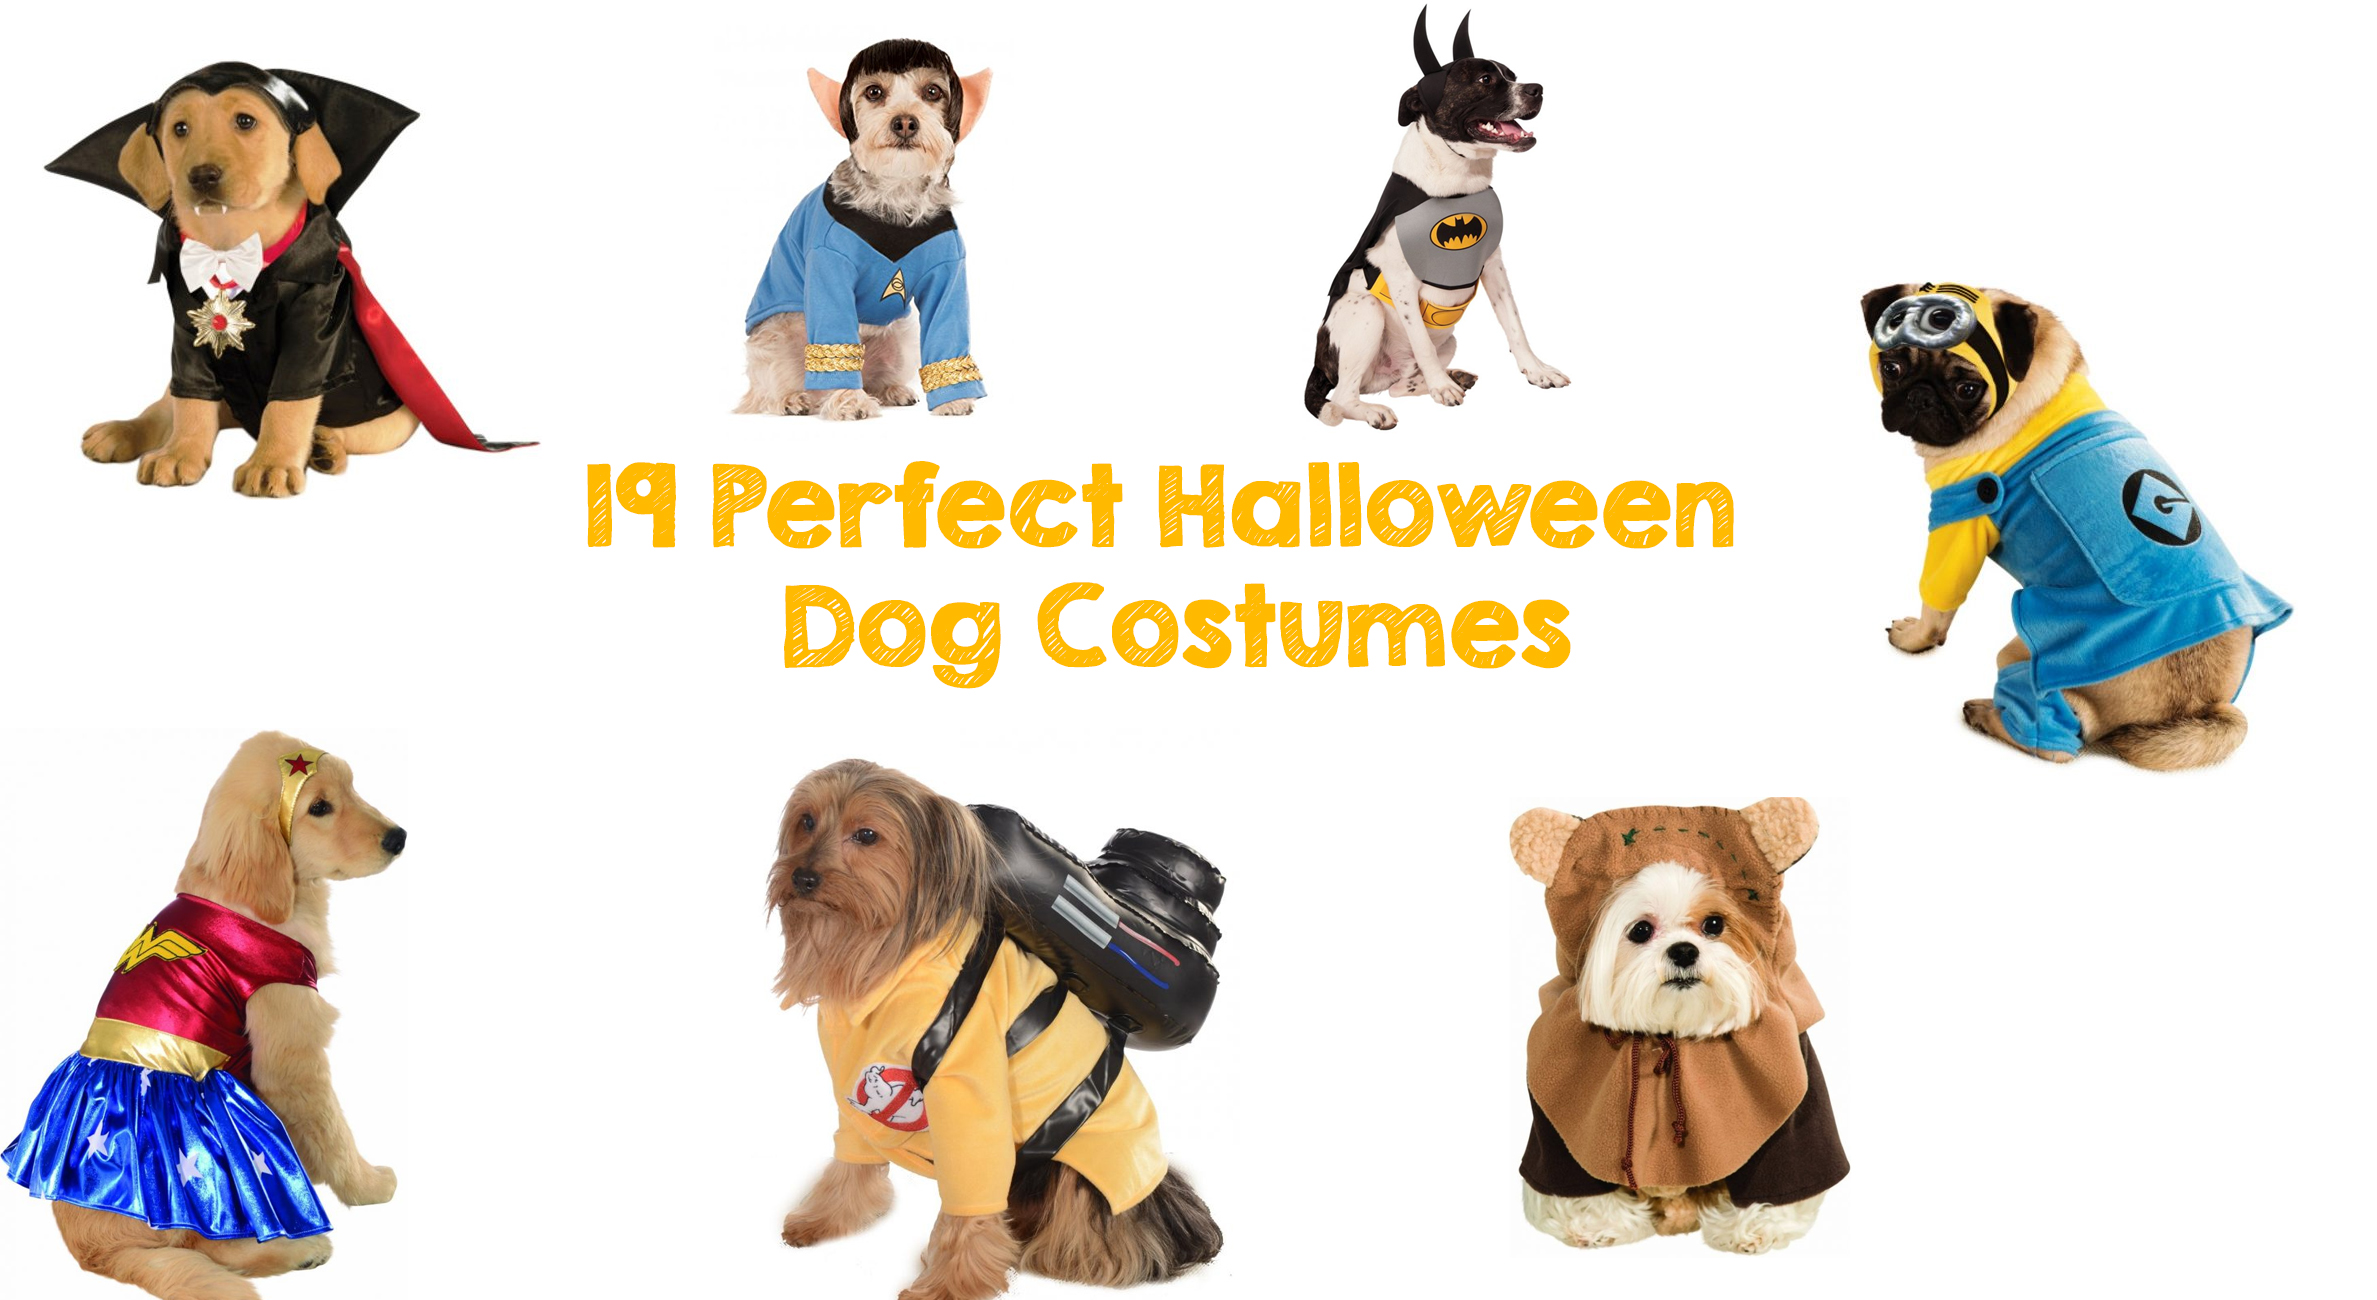 19 Perfect Halloween Dog Costumes - Walyou